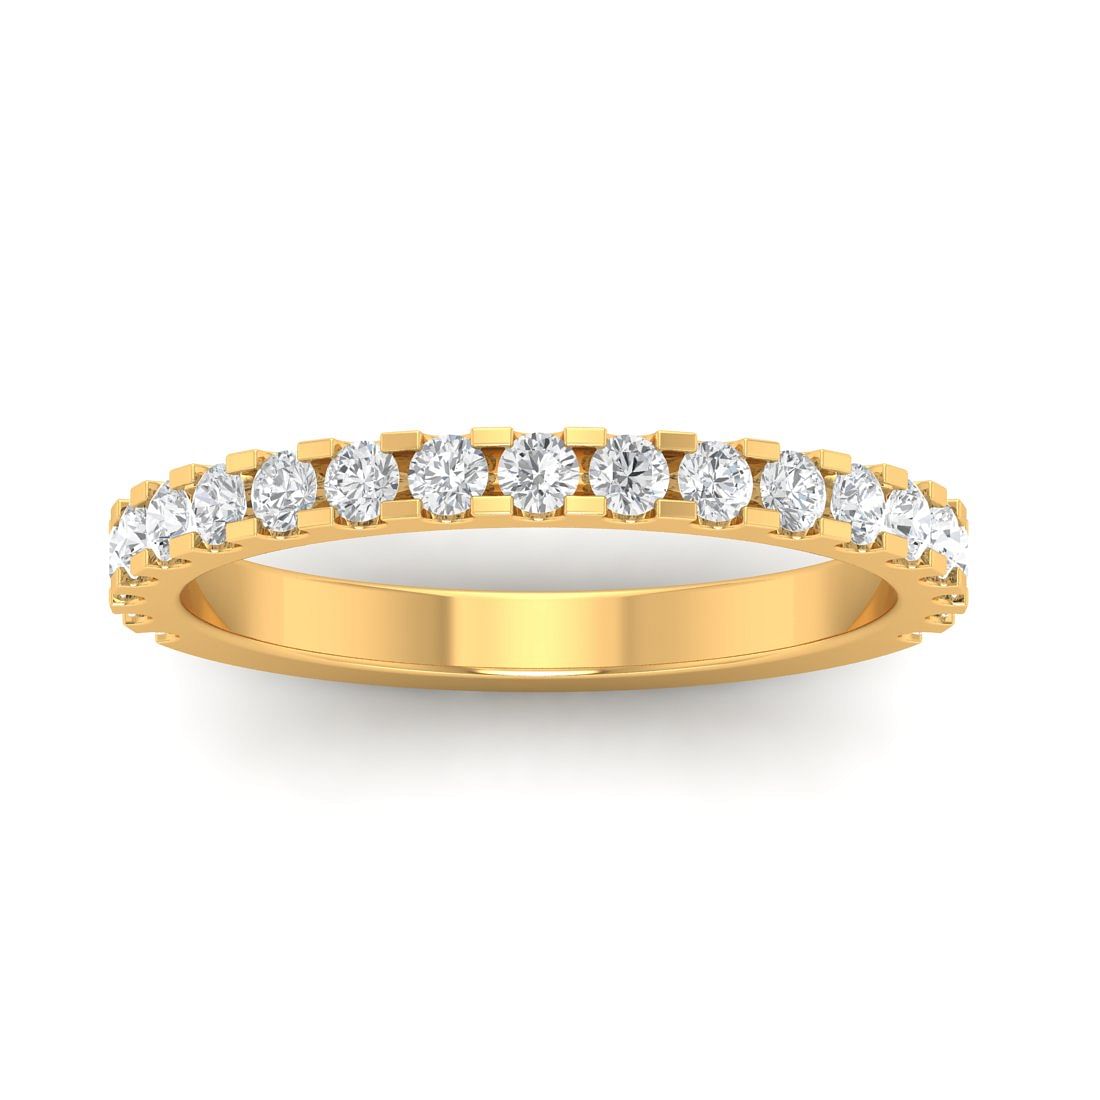 Eva Diamond Wedding Ring For Women With Yellow Gold